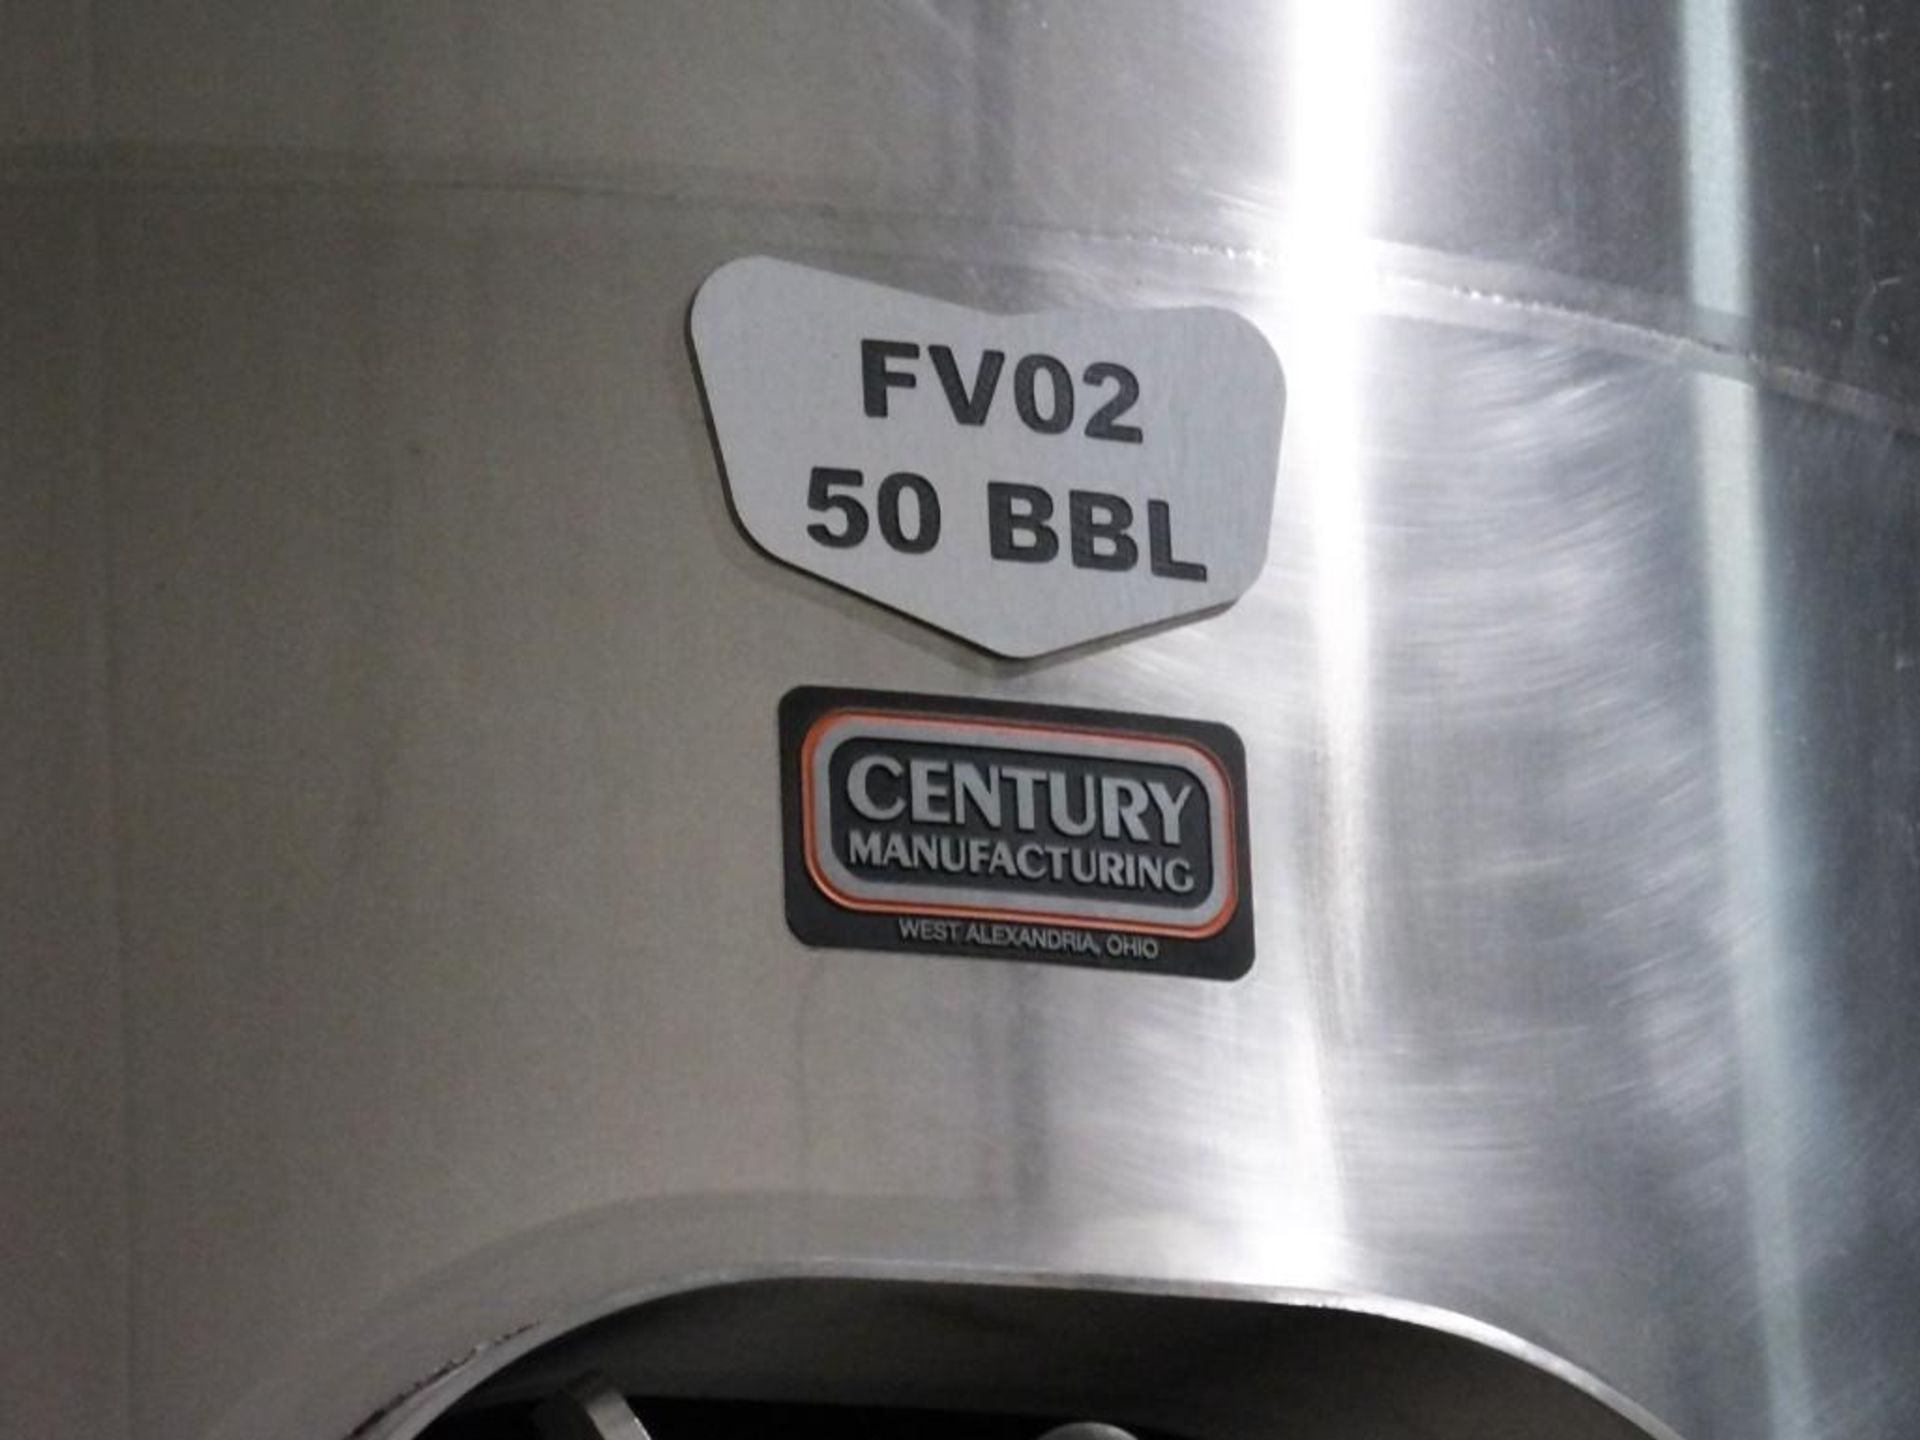 1994 Century Manf FV02 50 BBL S/S Jacketed Fermentation Tank - Image 3 of 4